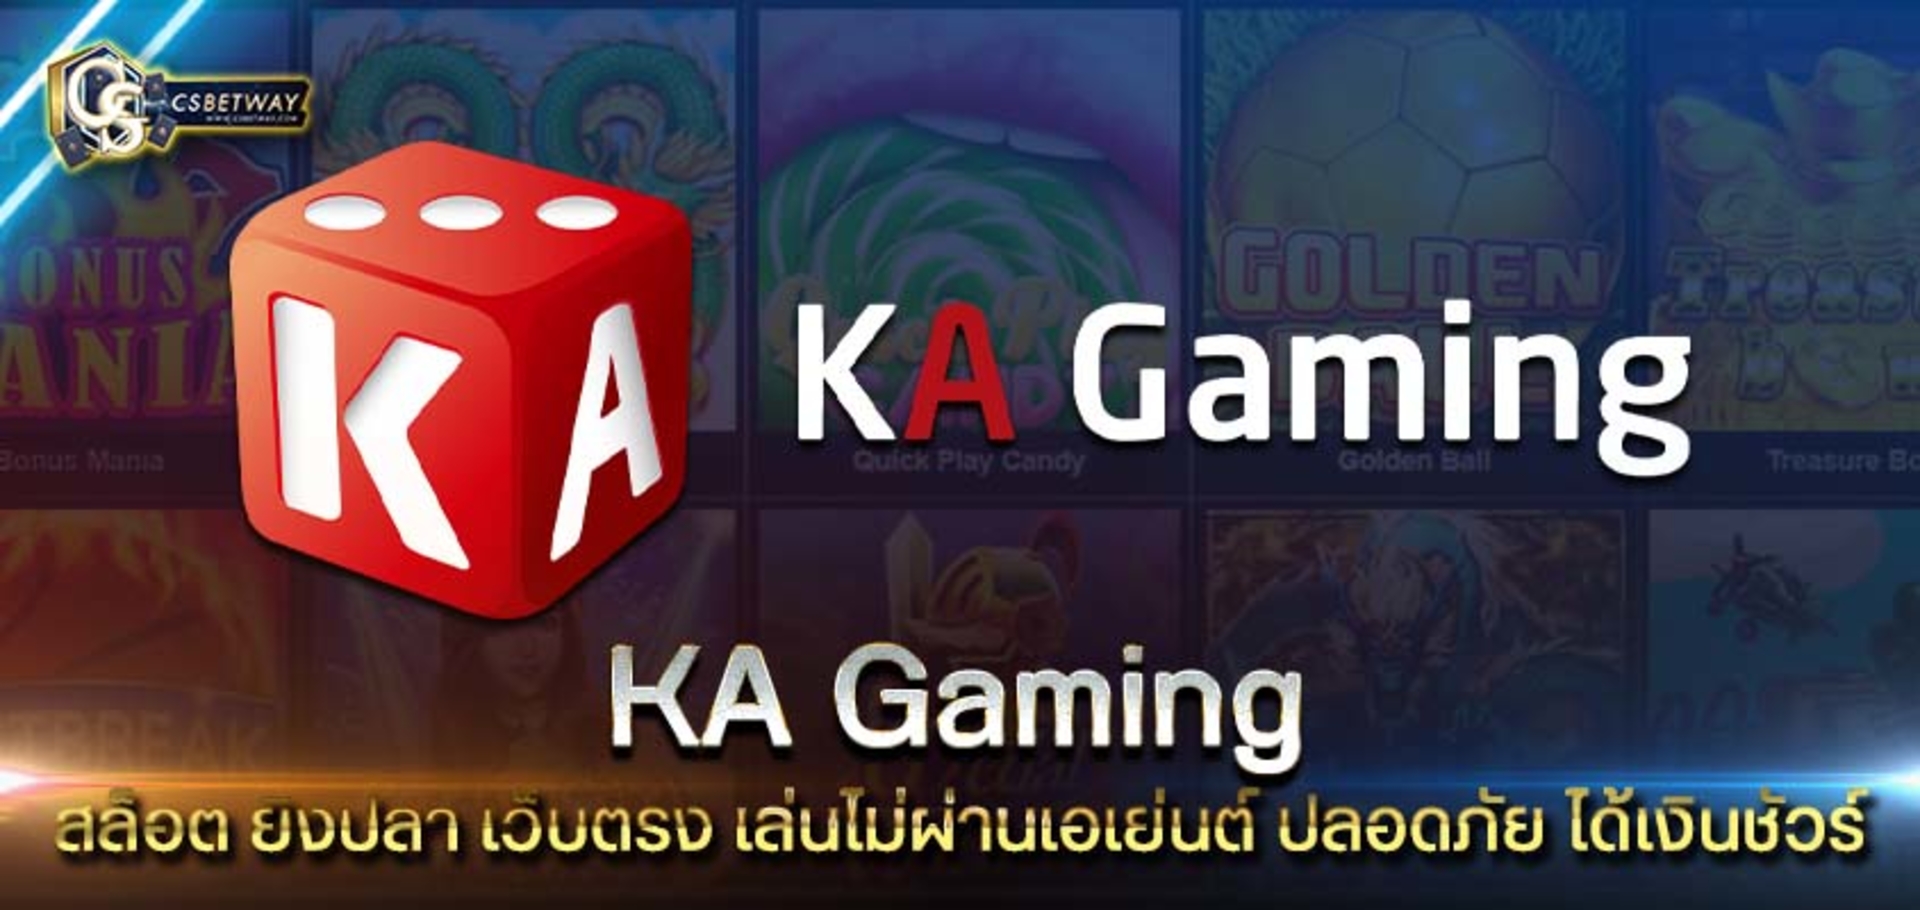 KA Gaming สล็อต ยิงปลา เว็บตรง เล่นไม่ผ่านเอเย่นต์ ปลอดภัย ได้เงินชัวร์